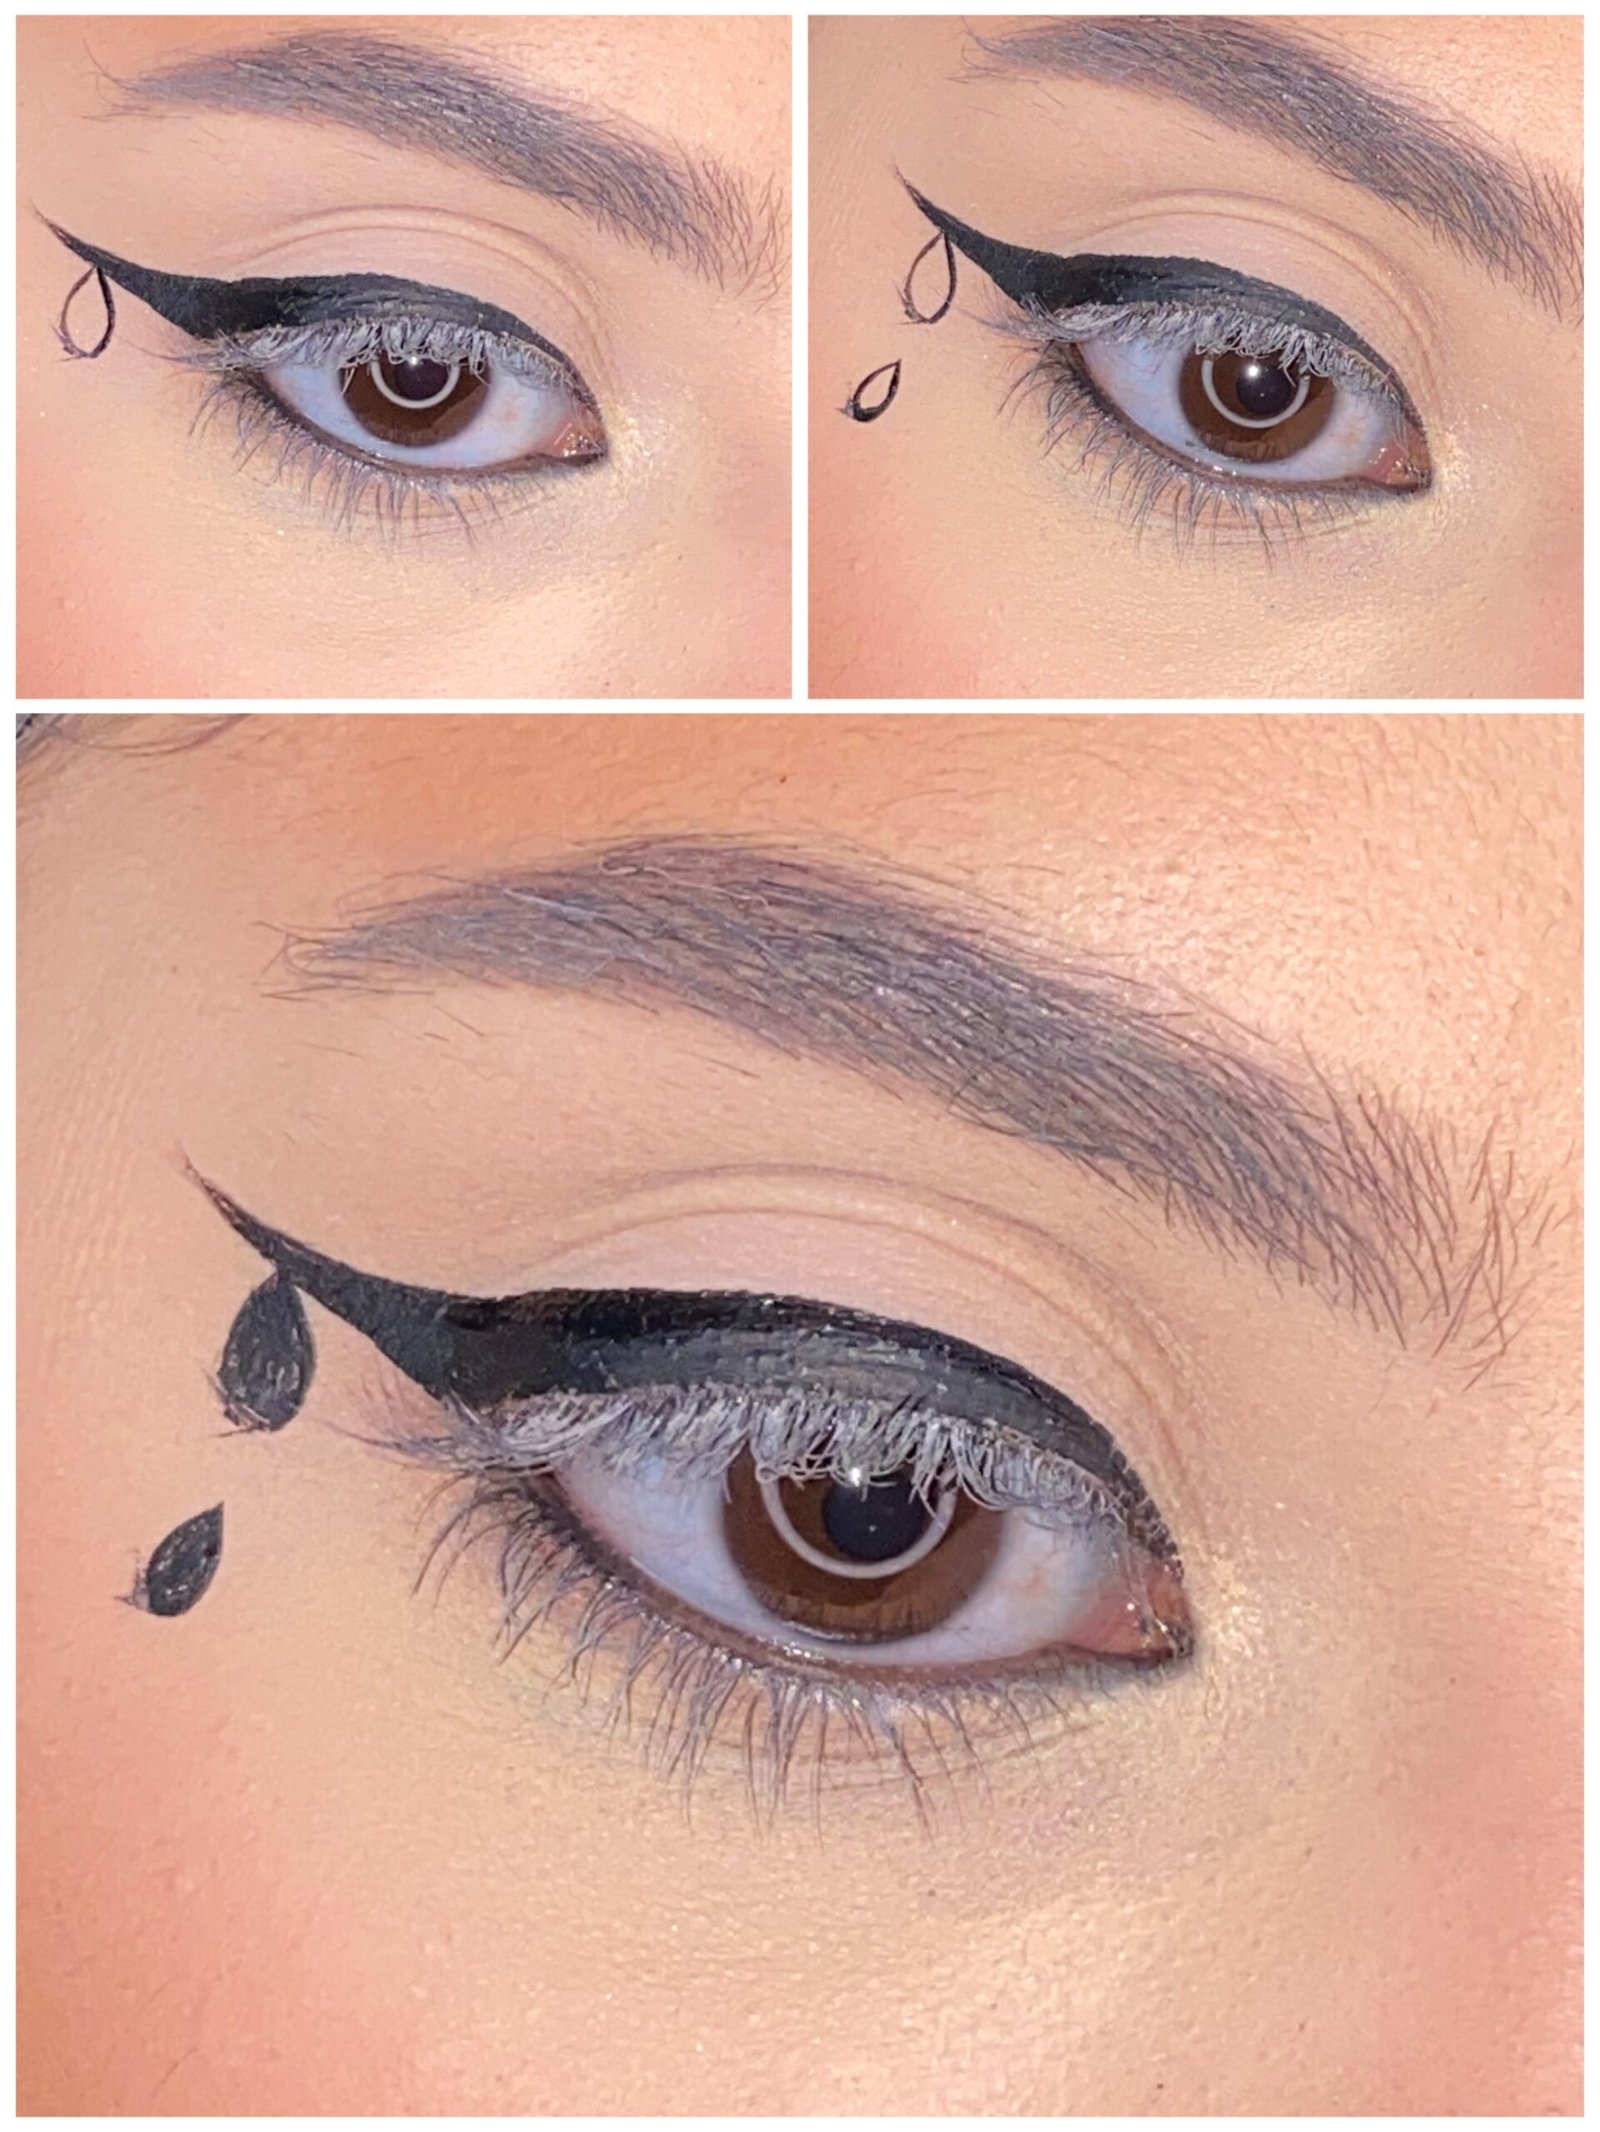 Tear drop eyeliner makeup